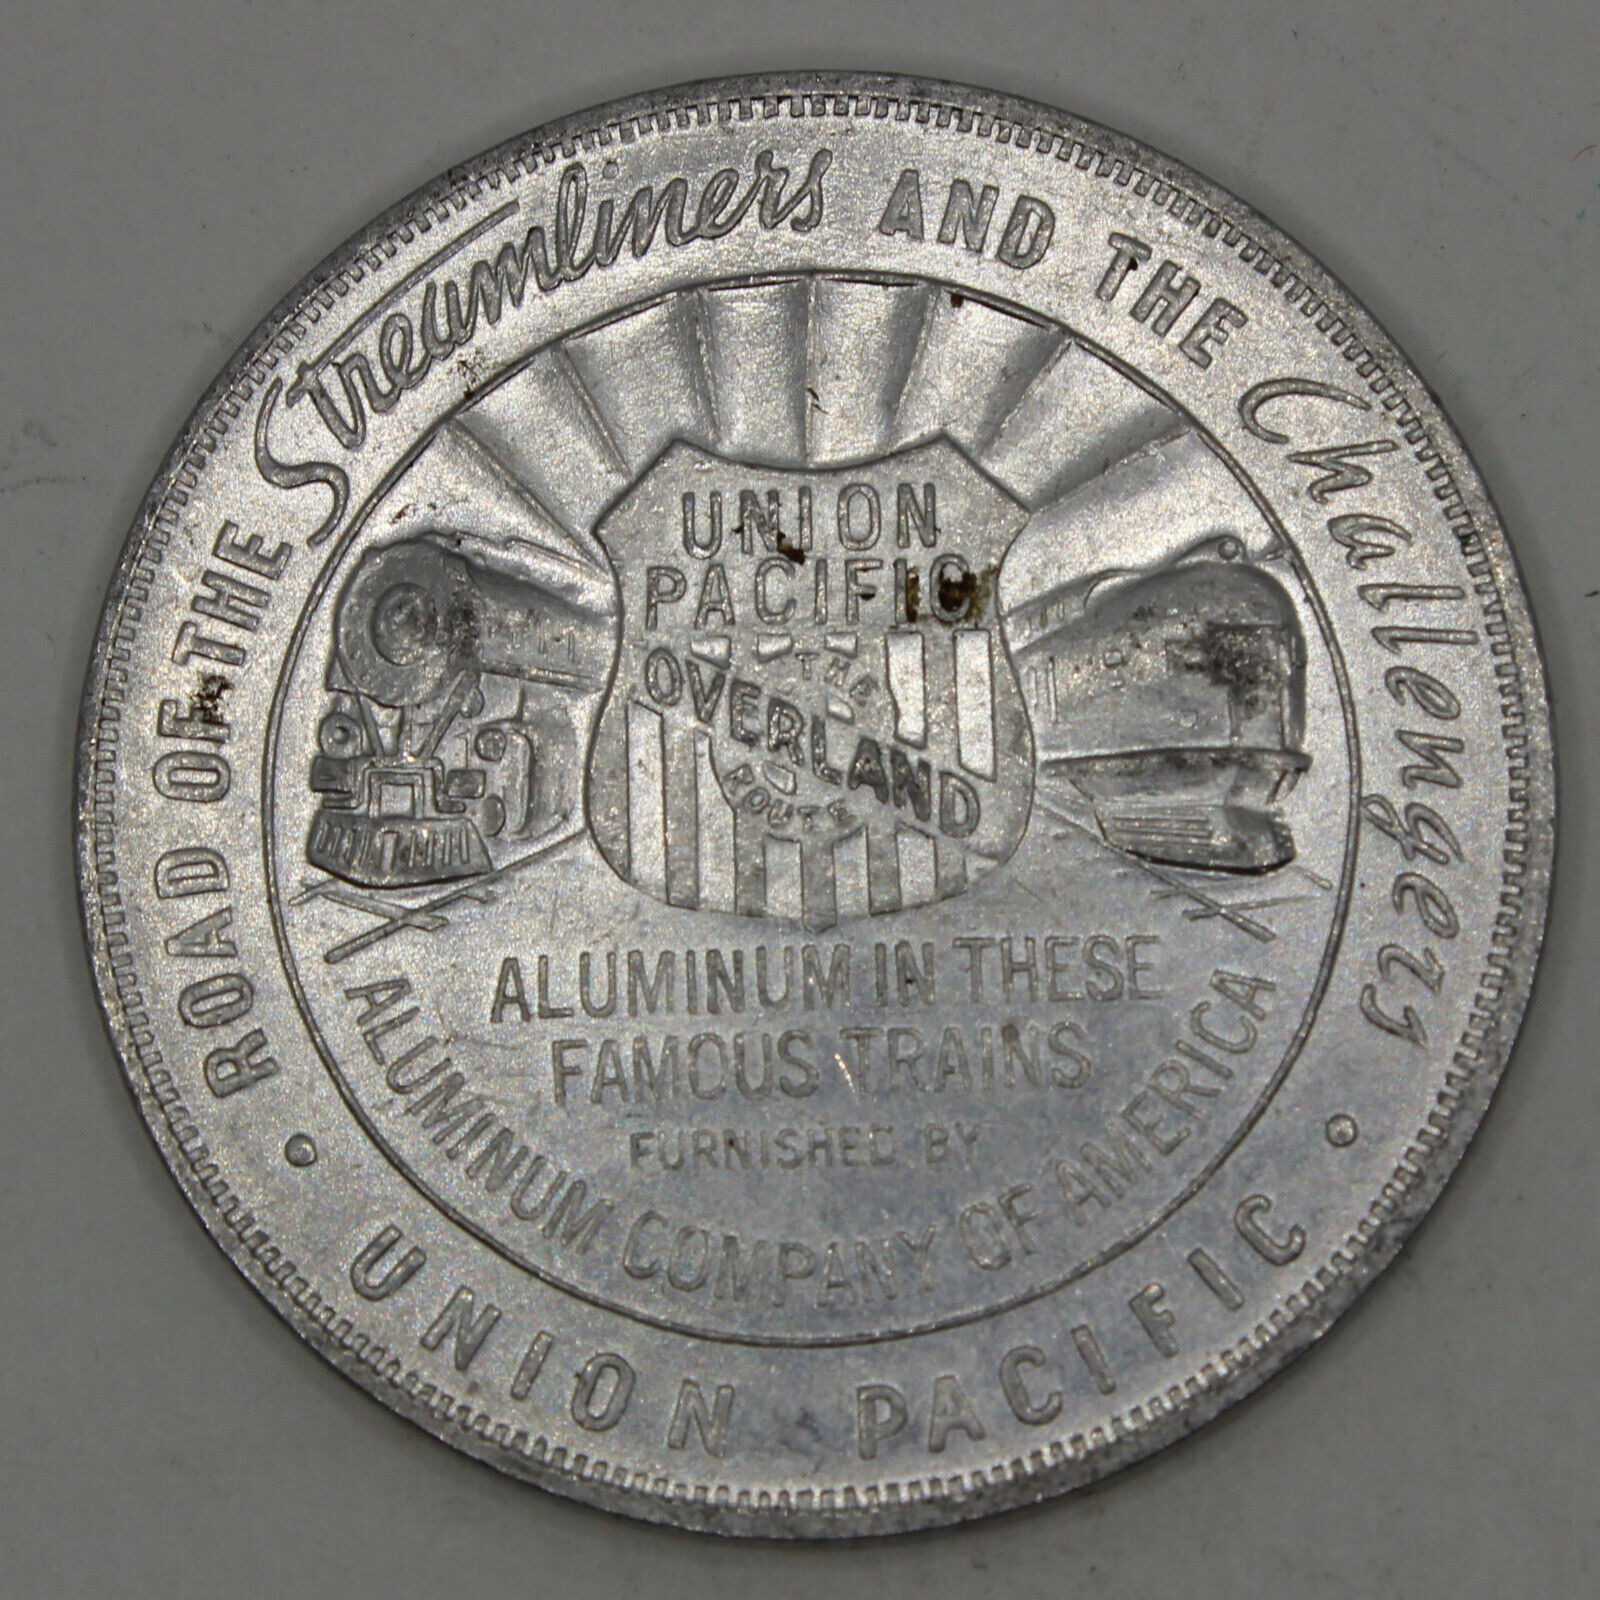 1939 Golden Gate International Exposition Union Pacific Souvenir Token/medal